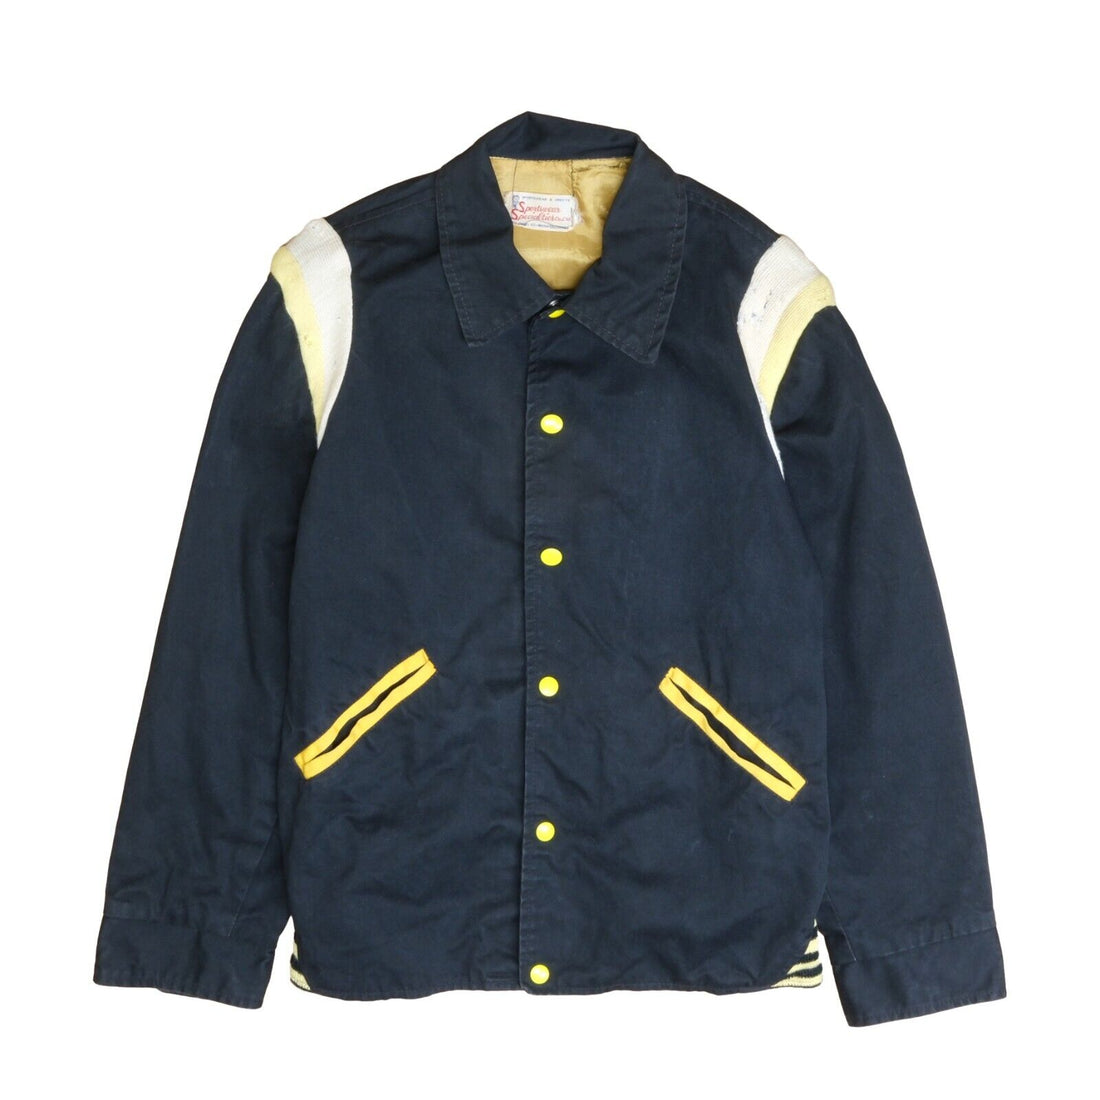 Vintage Sports Specialties Light Jacket Size Medium Black